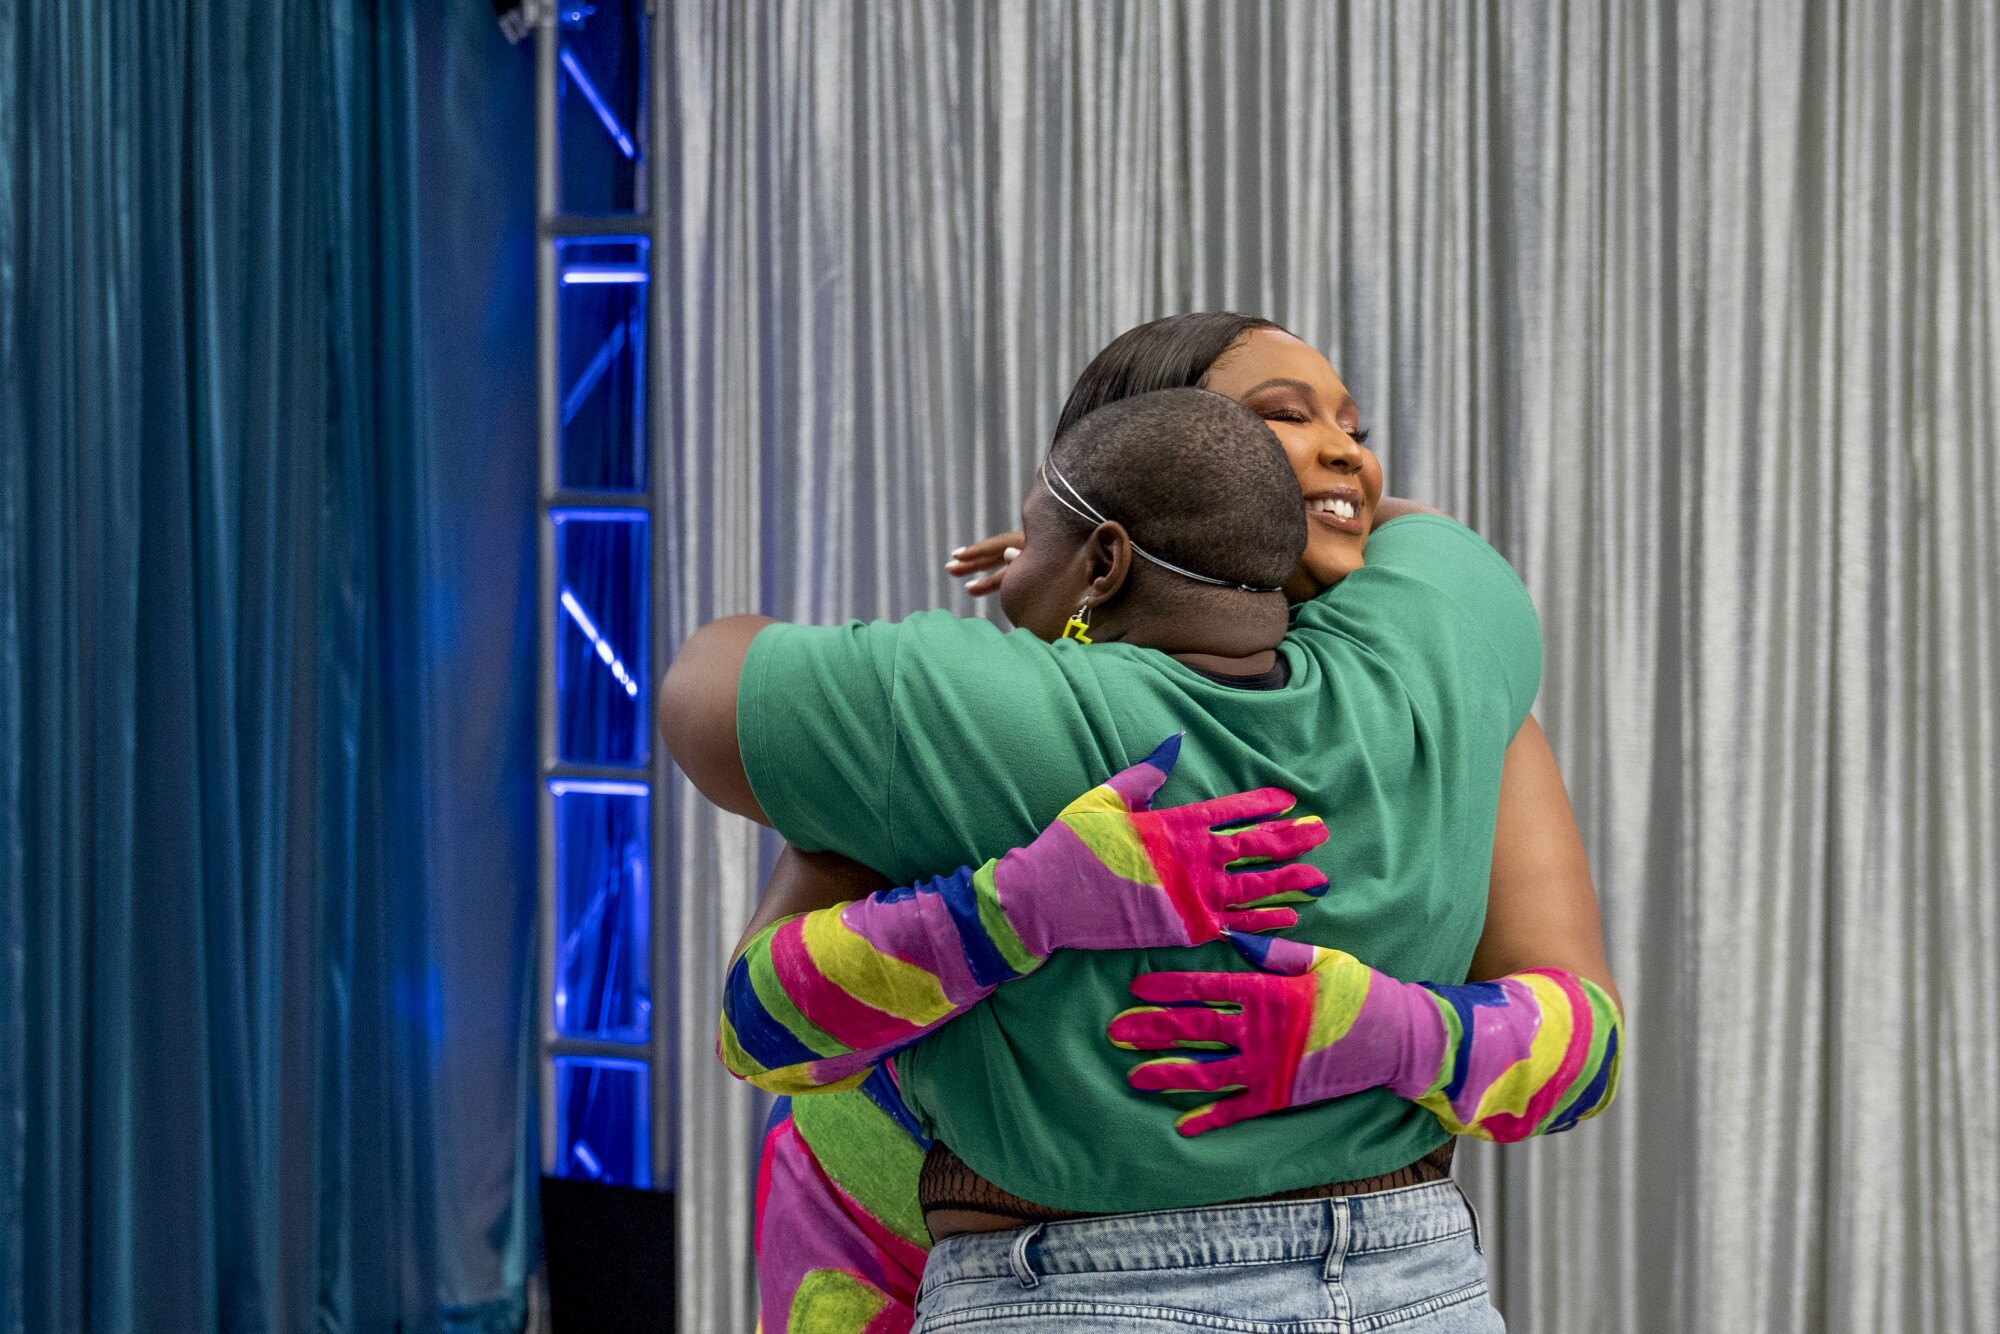 Two women wearing colorful clothing hug